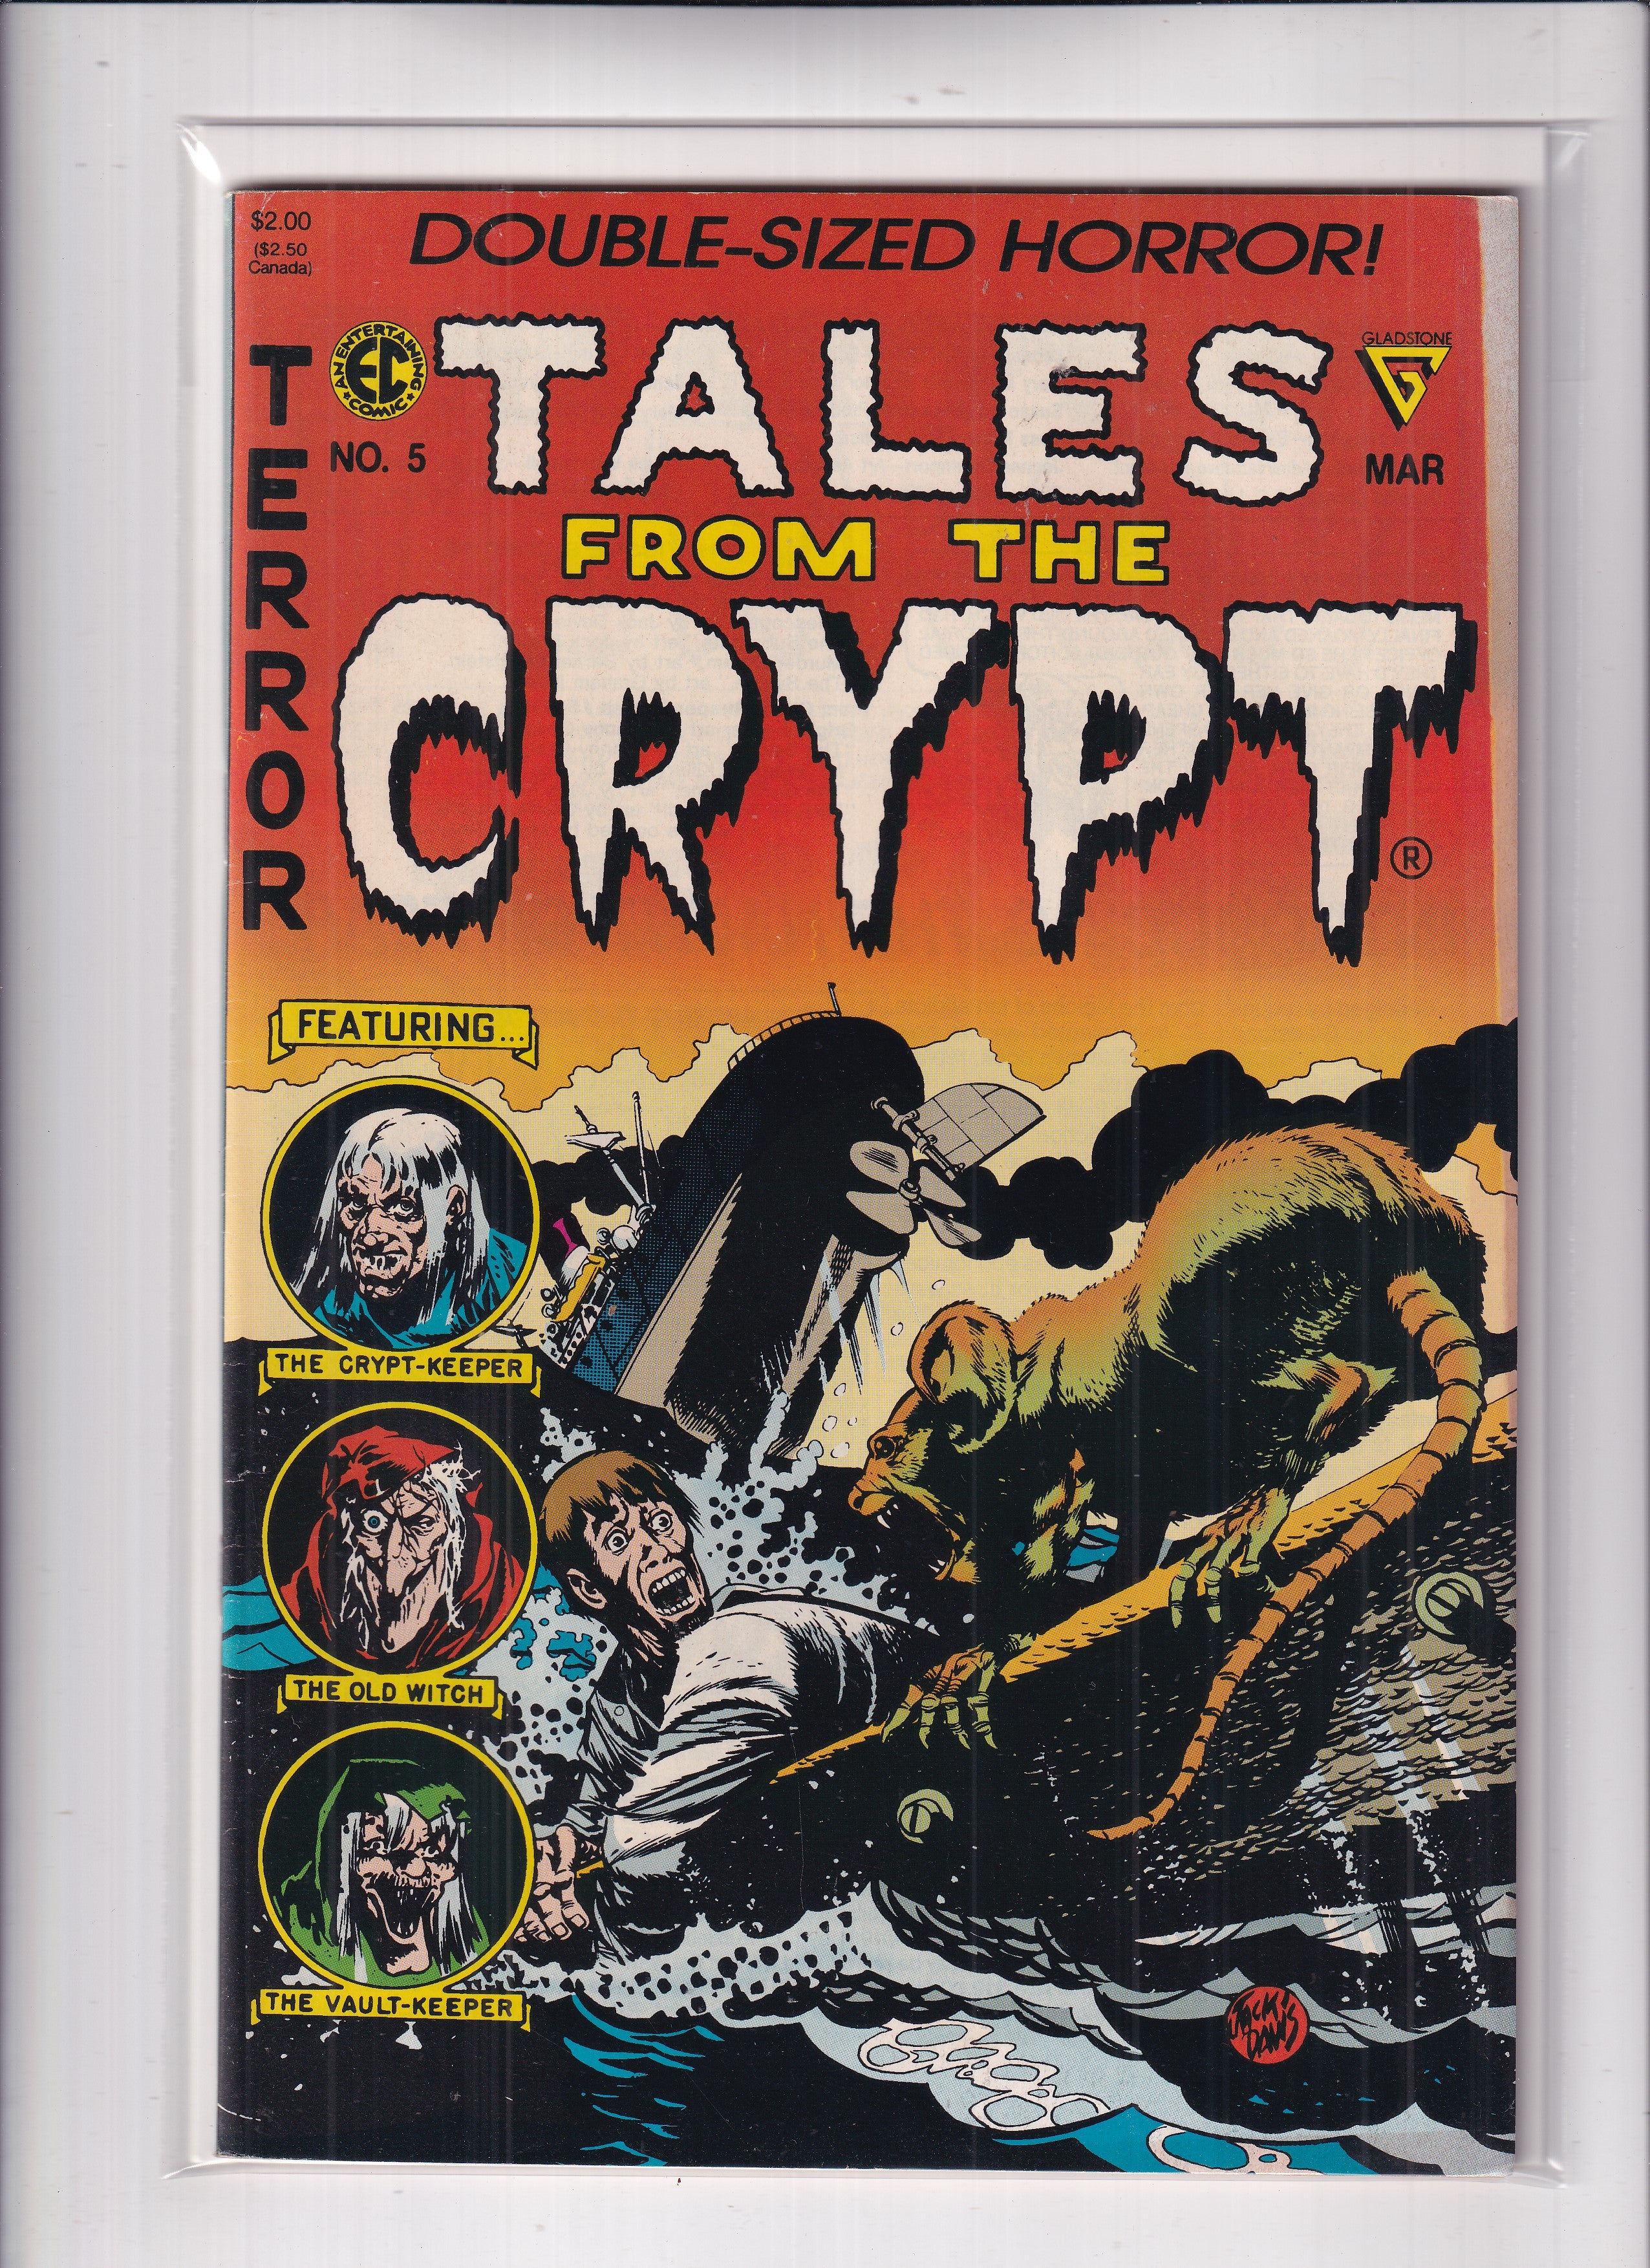 TALES FROM THE CRYPT #5 EC REPRINT - Slab City Comics 